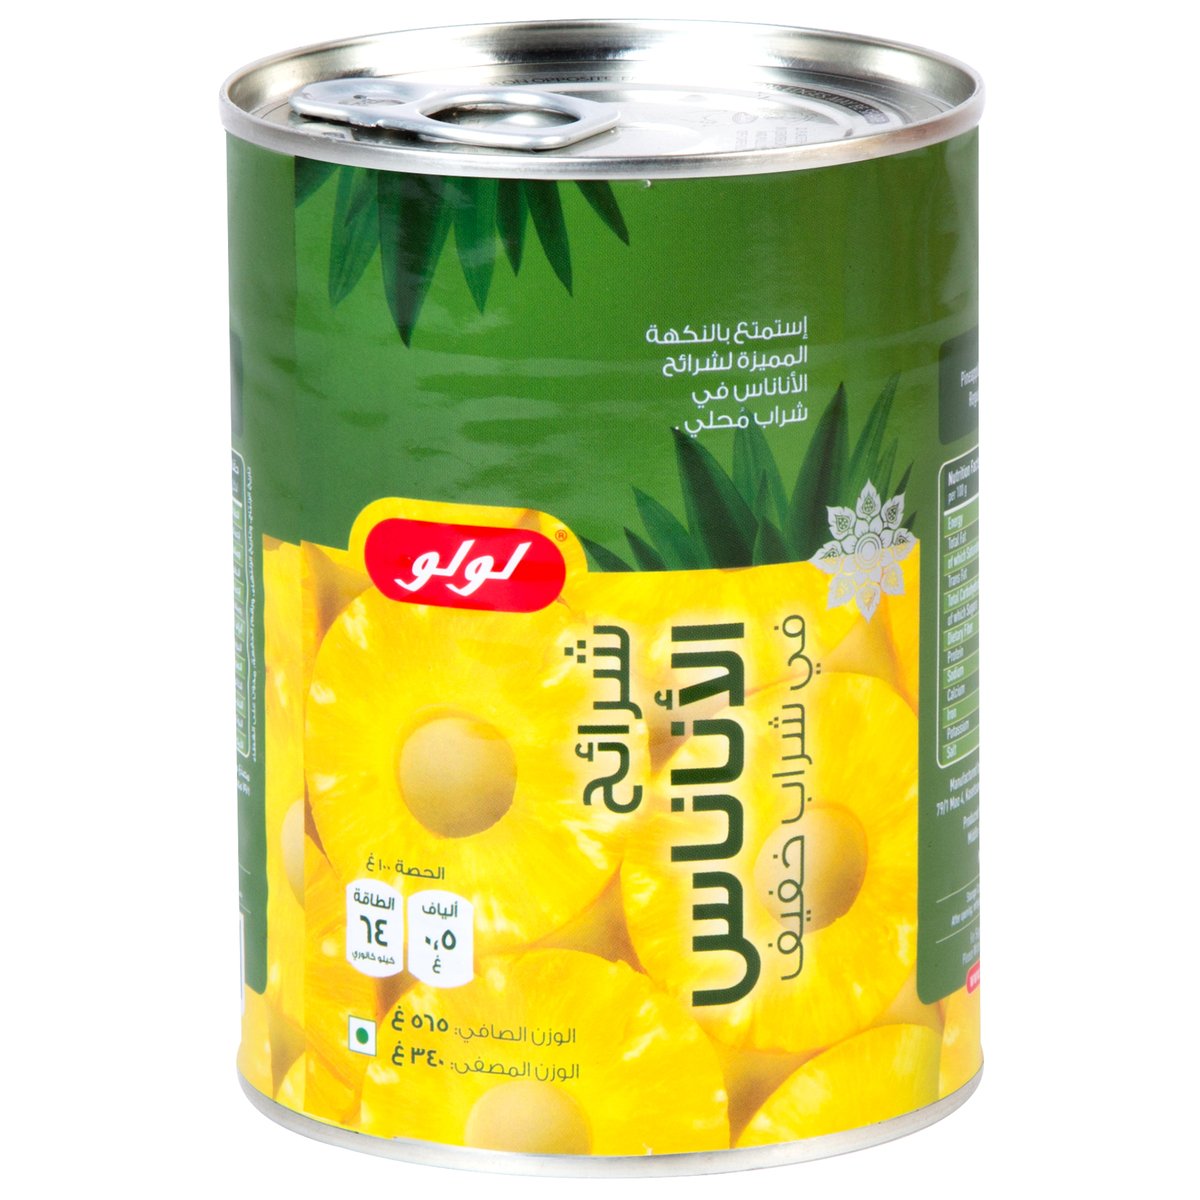 LuLu Sliced Pineapple In Light Syrup 565 g